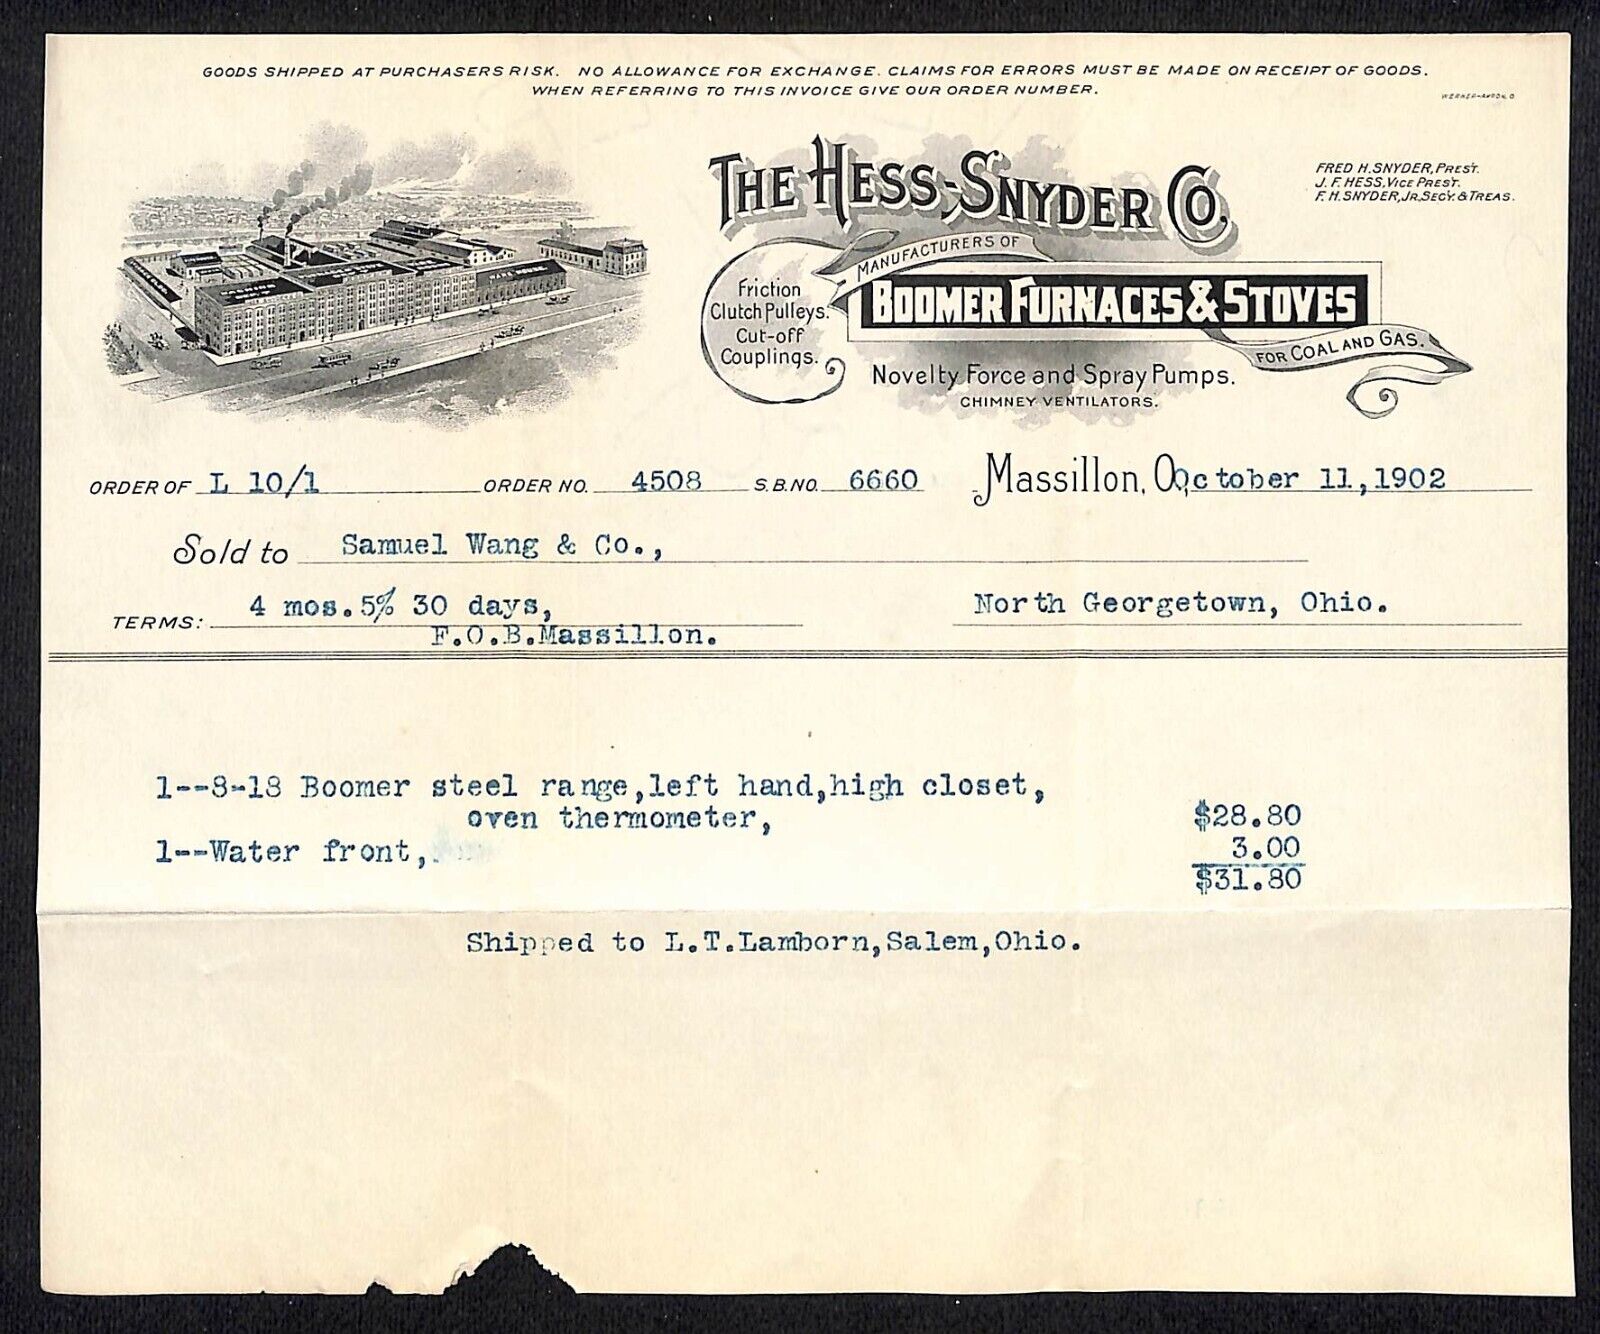 Hess-Snyder Co Boomer Furnaces Massillon Billhead 1902 Samuel Wang* N Georgetown